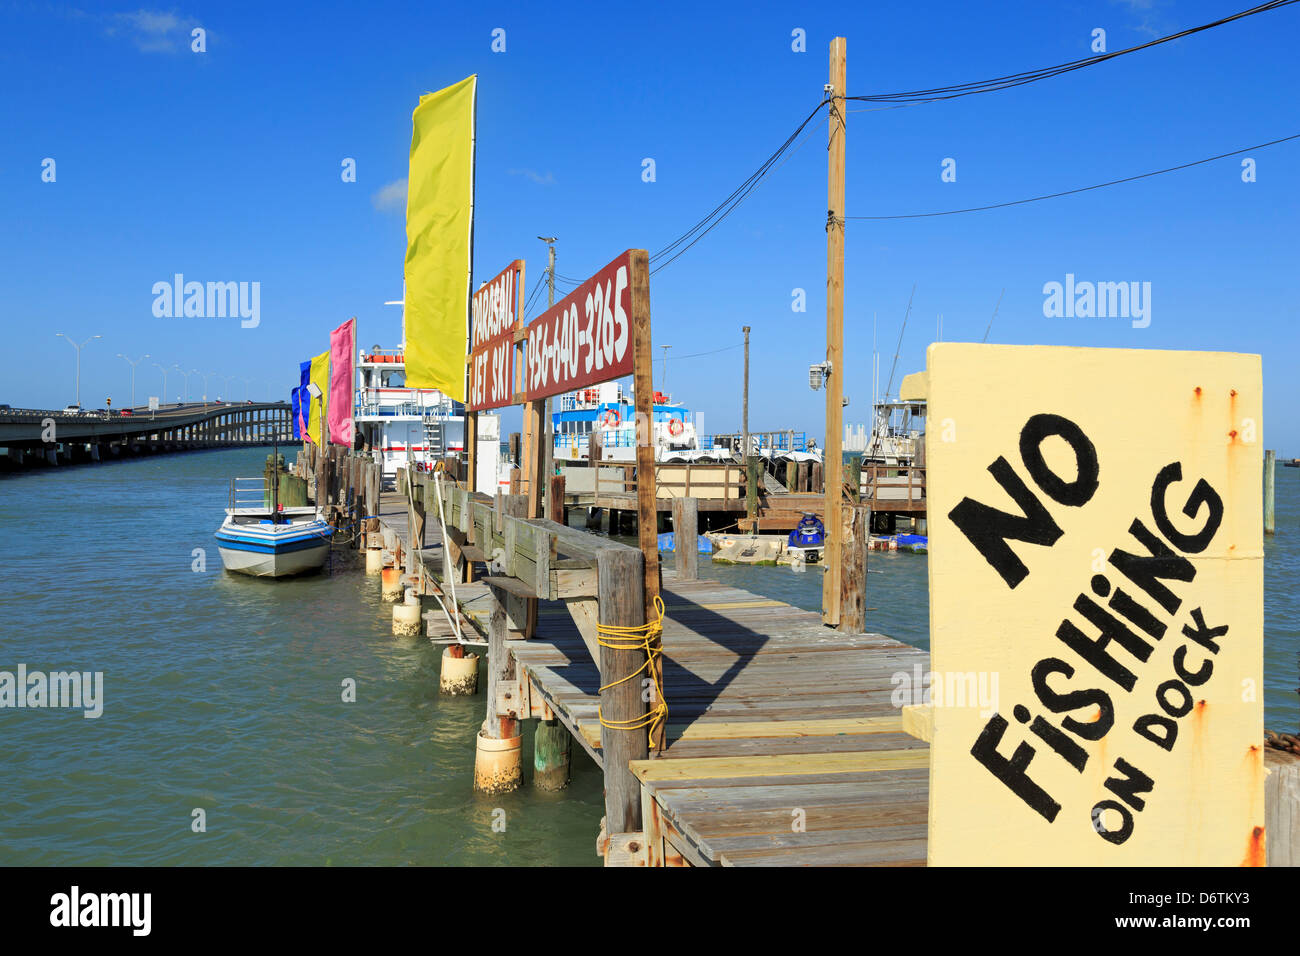 https://c8.alamy.com/comp/D6TKY3/no-fishing-sign-on-a-dock-dolphin-dock-port-isabel-texas-usa-D6TKY3.jpg